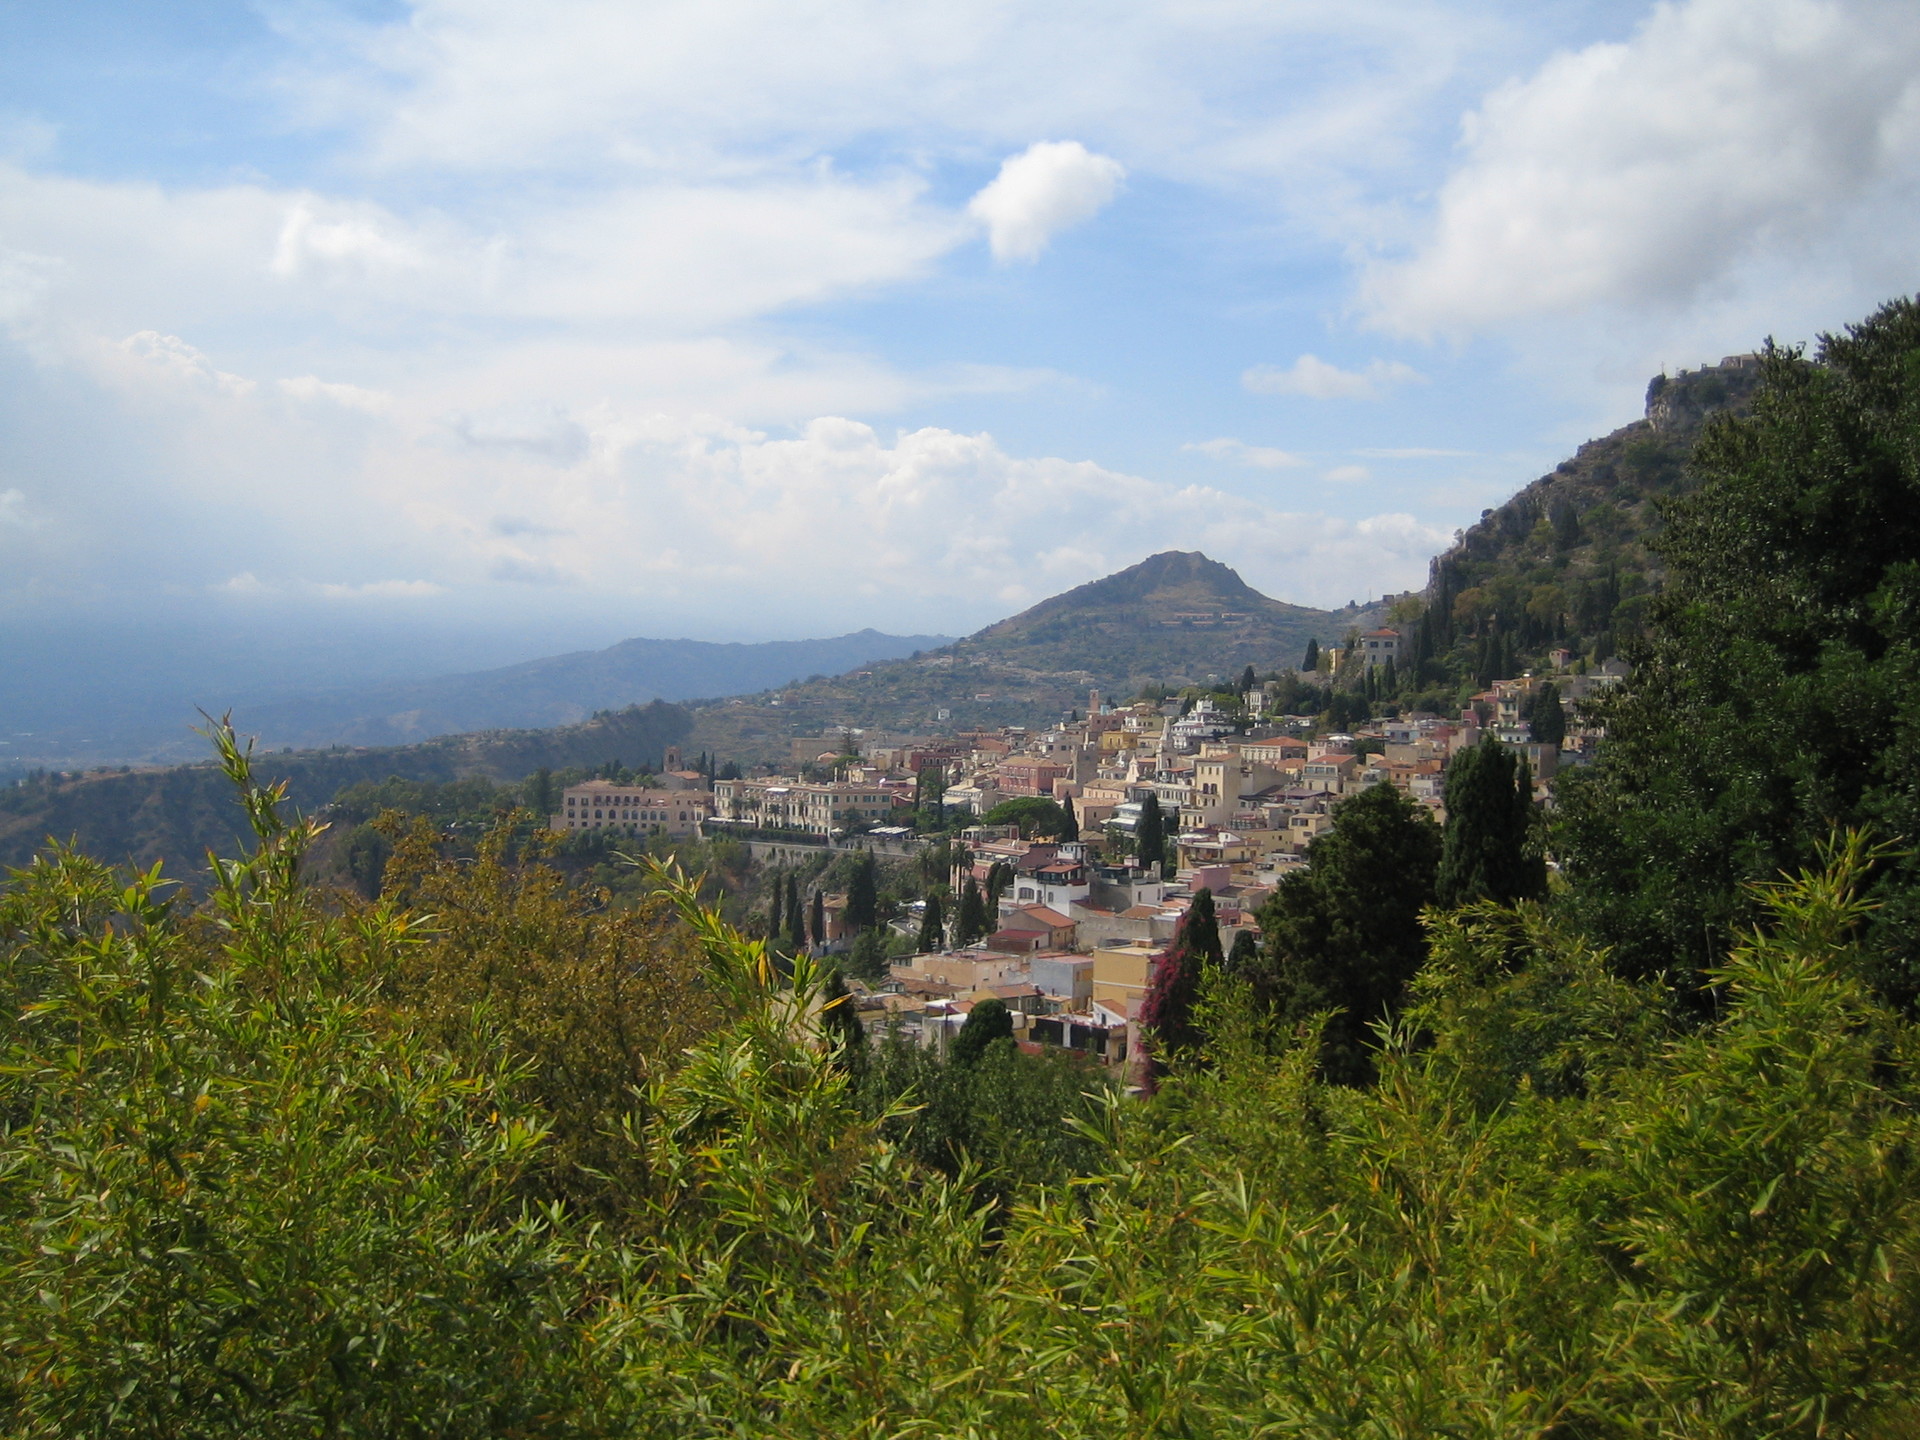 Taormina - Goethe was here!